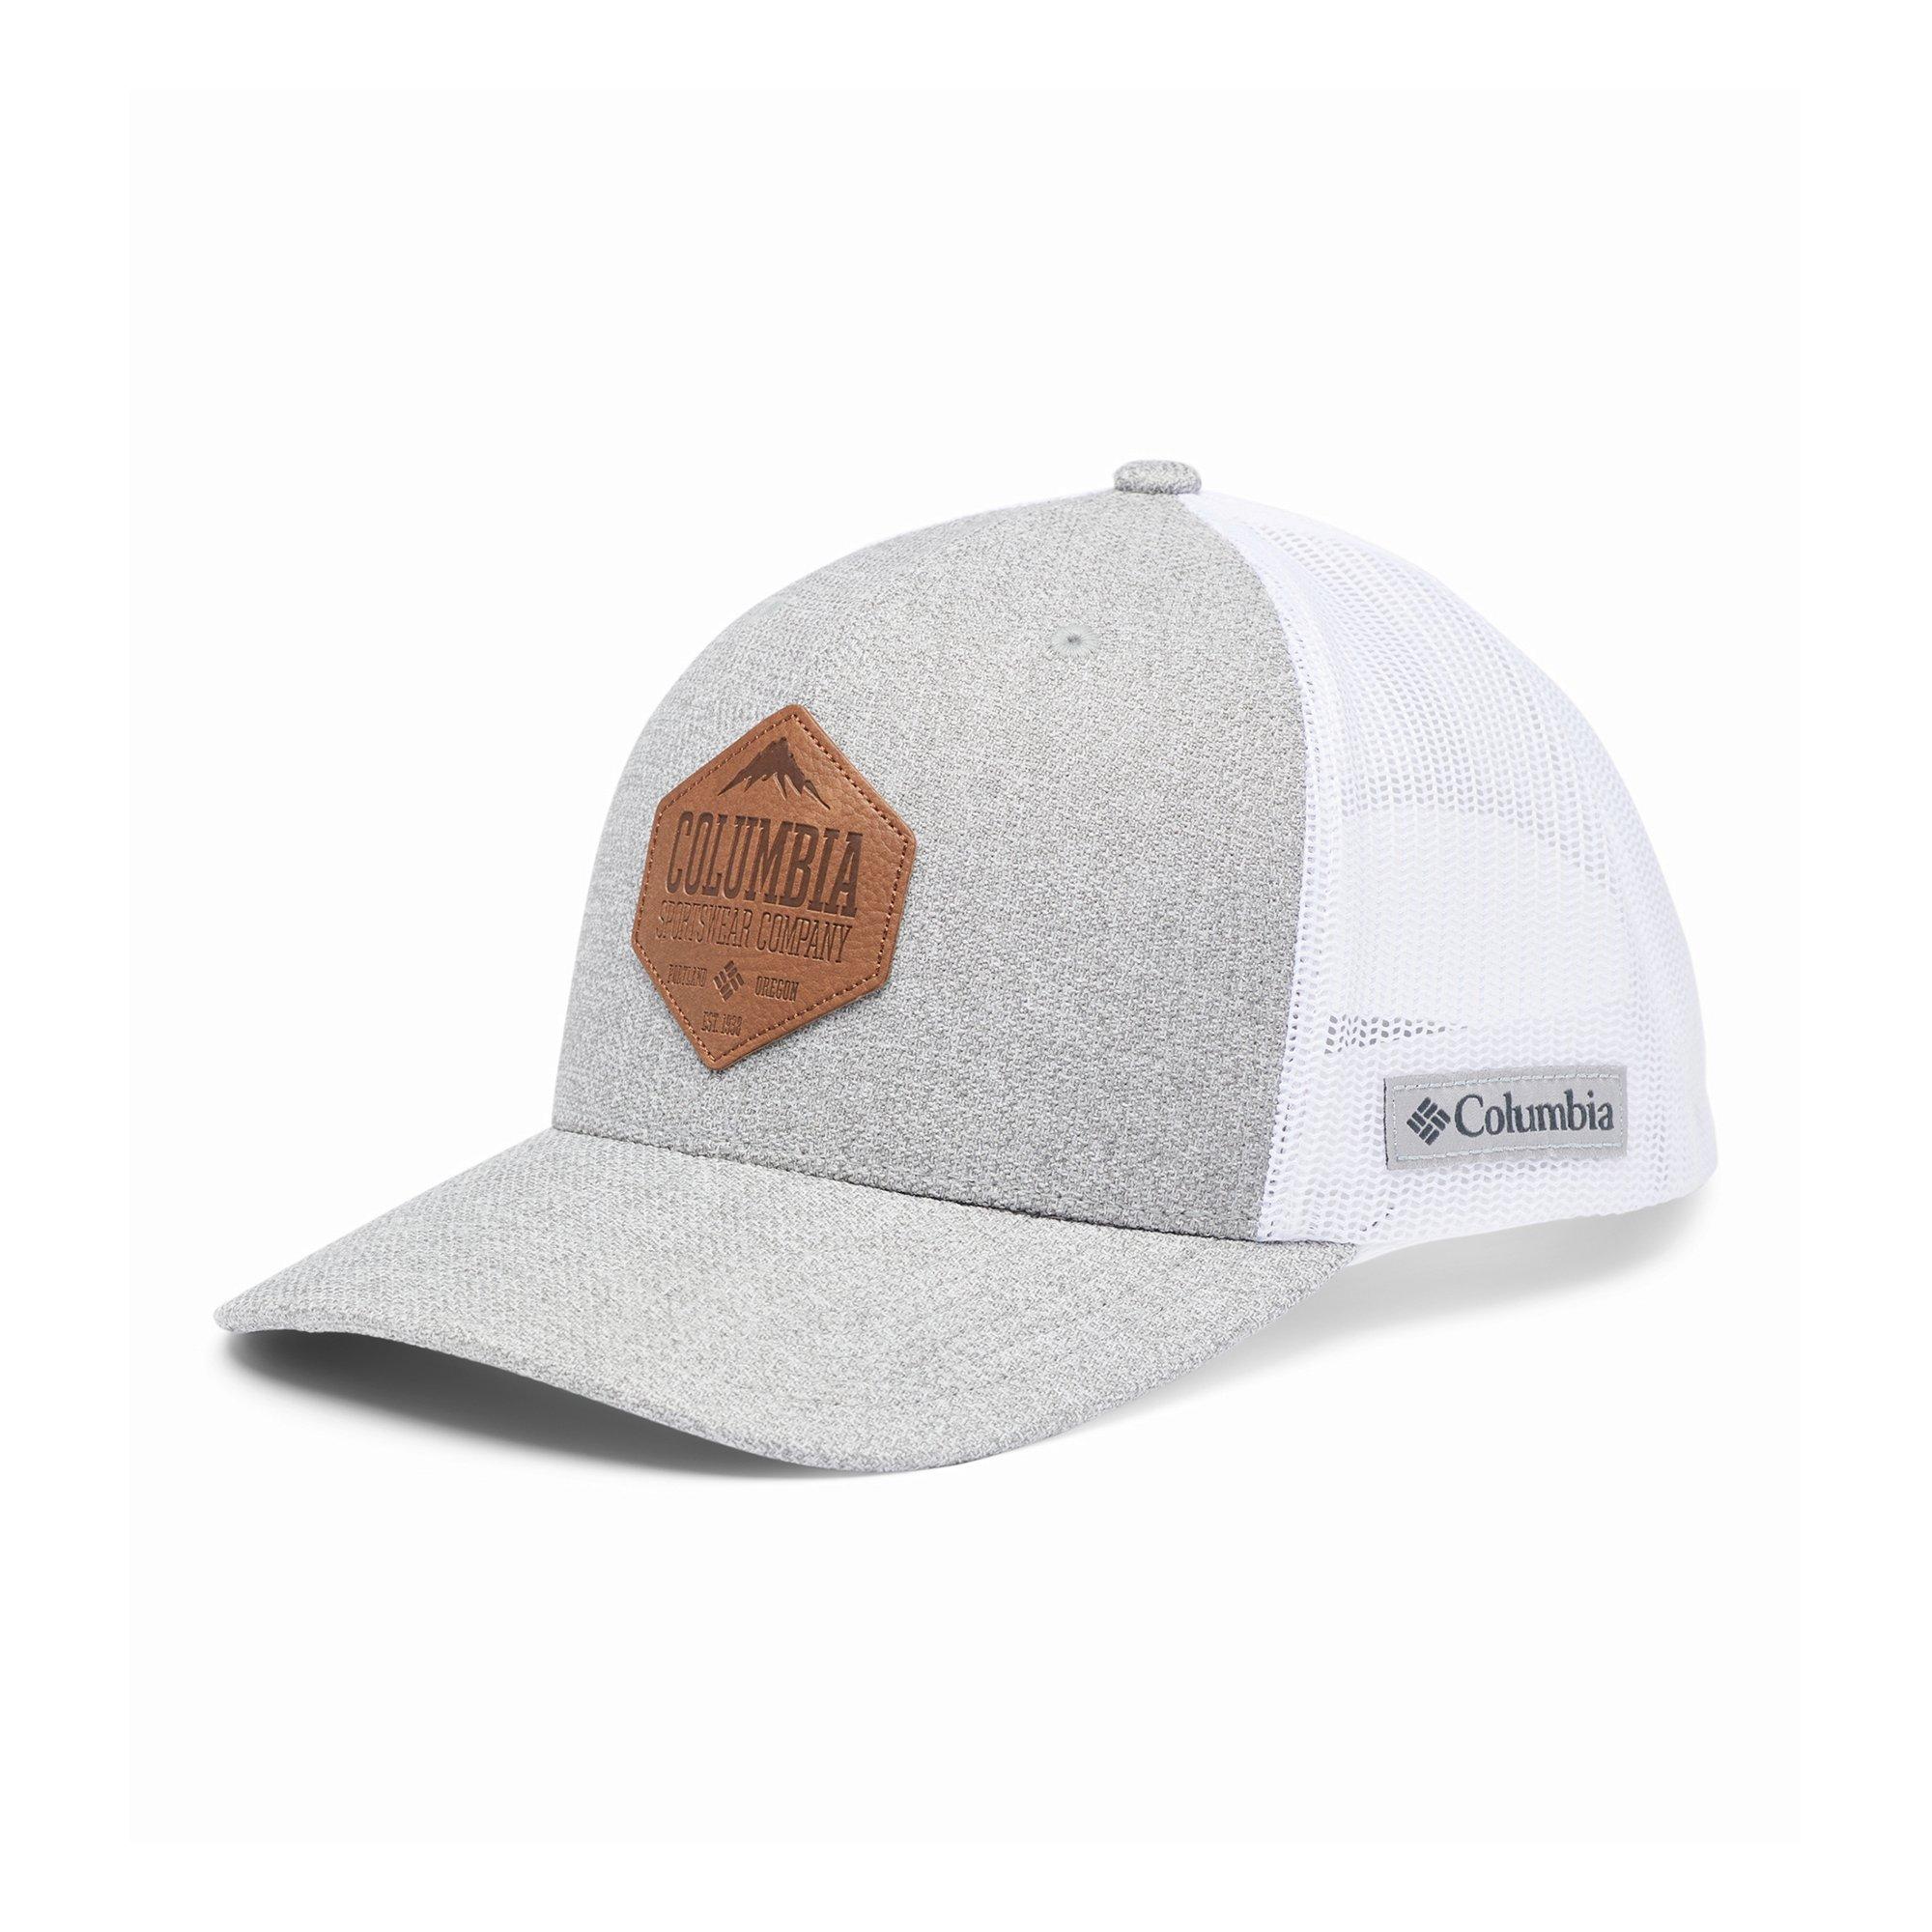 Columbia PFG Meshback Snapback Hat - Grey/White